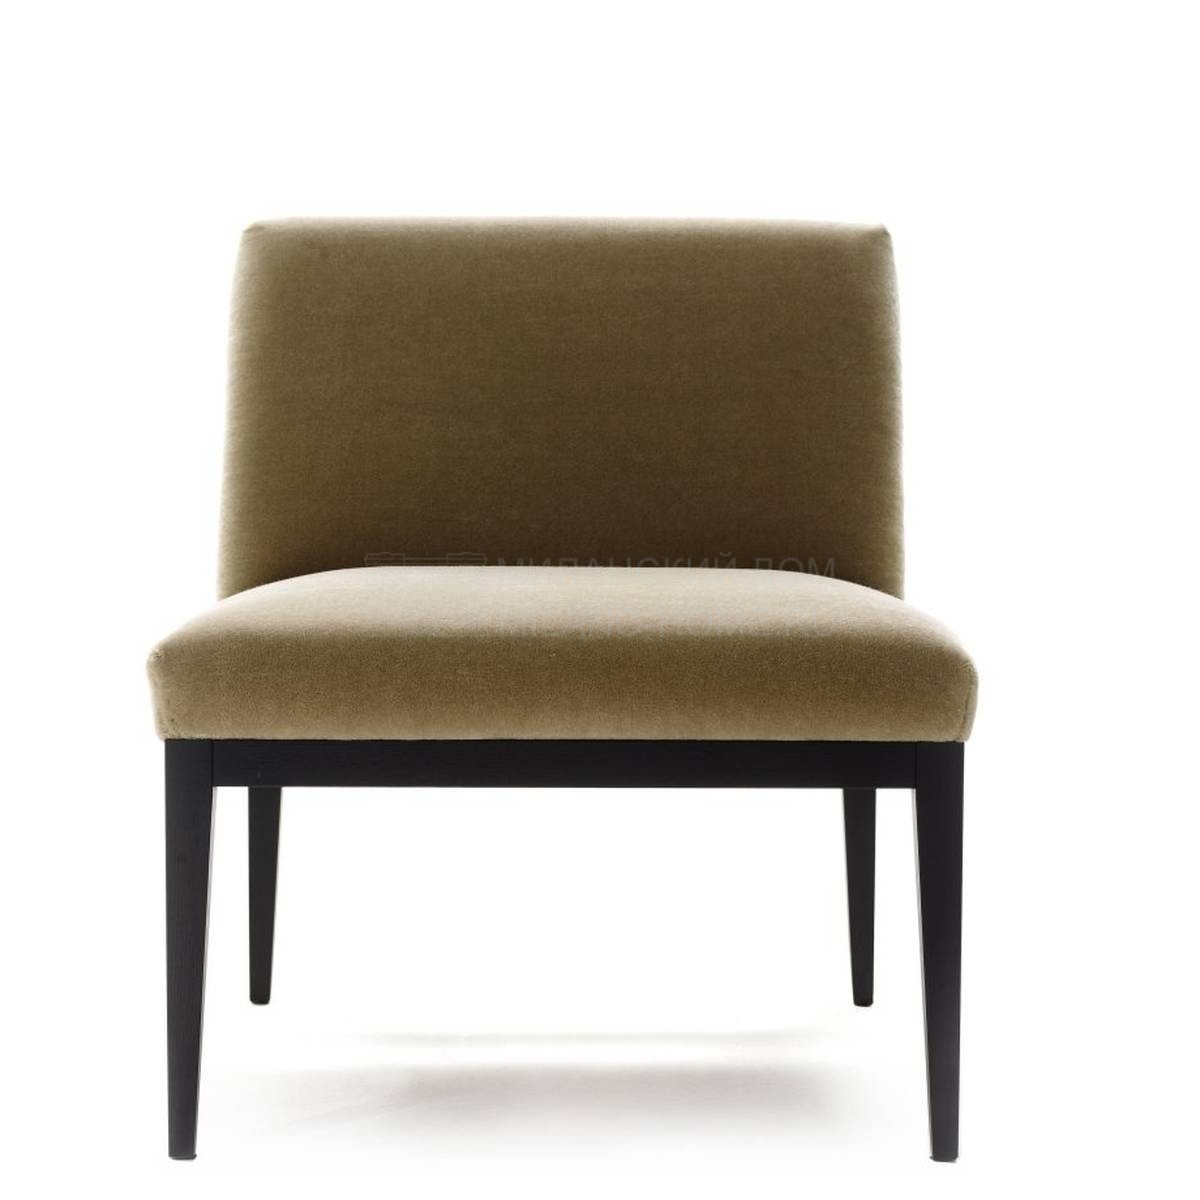 Кресло Gilda armchair из Италии фабрики MARIONI